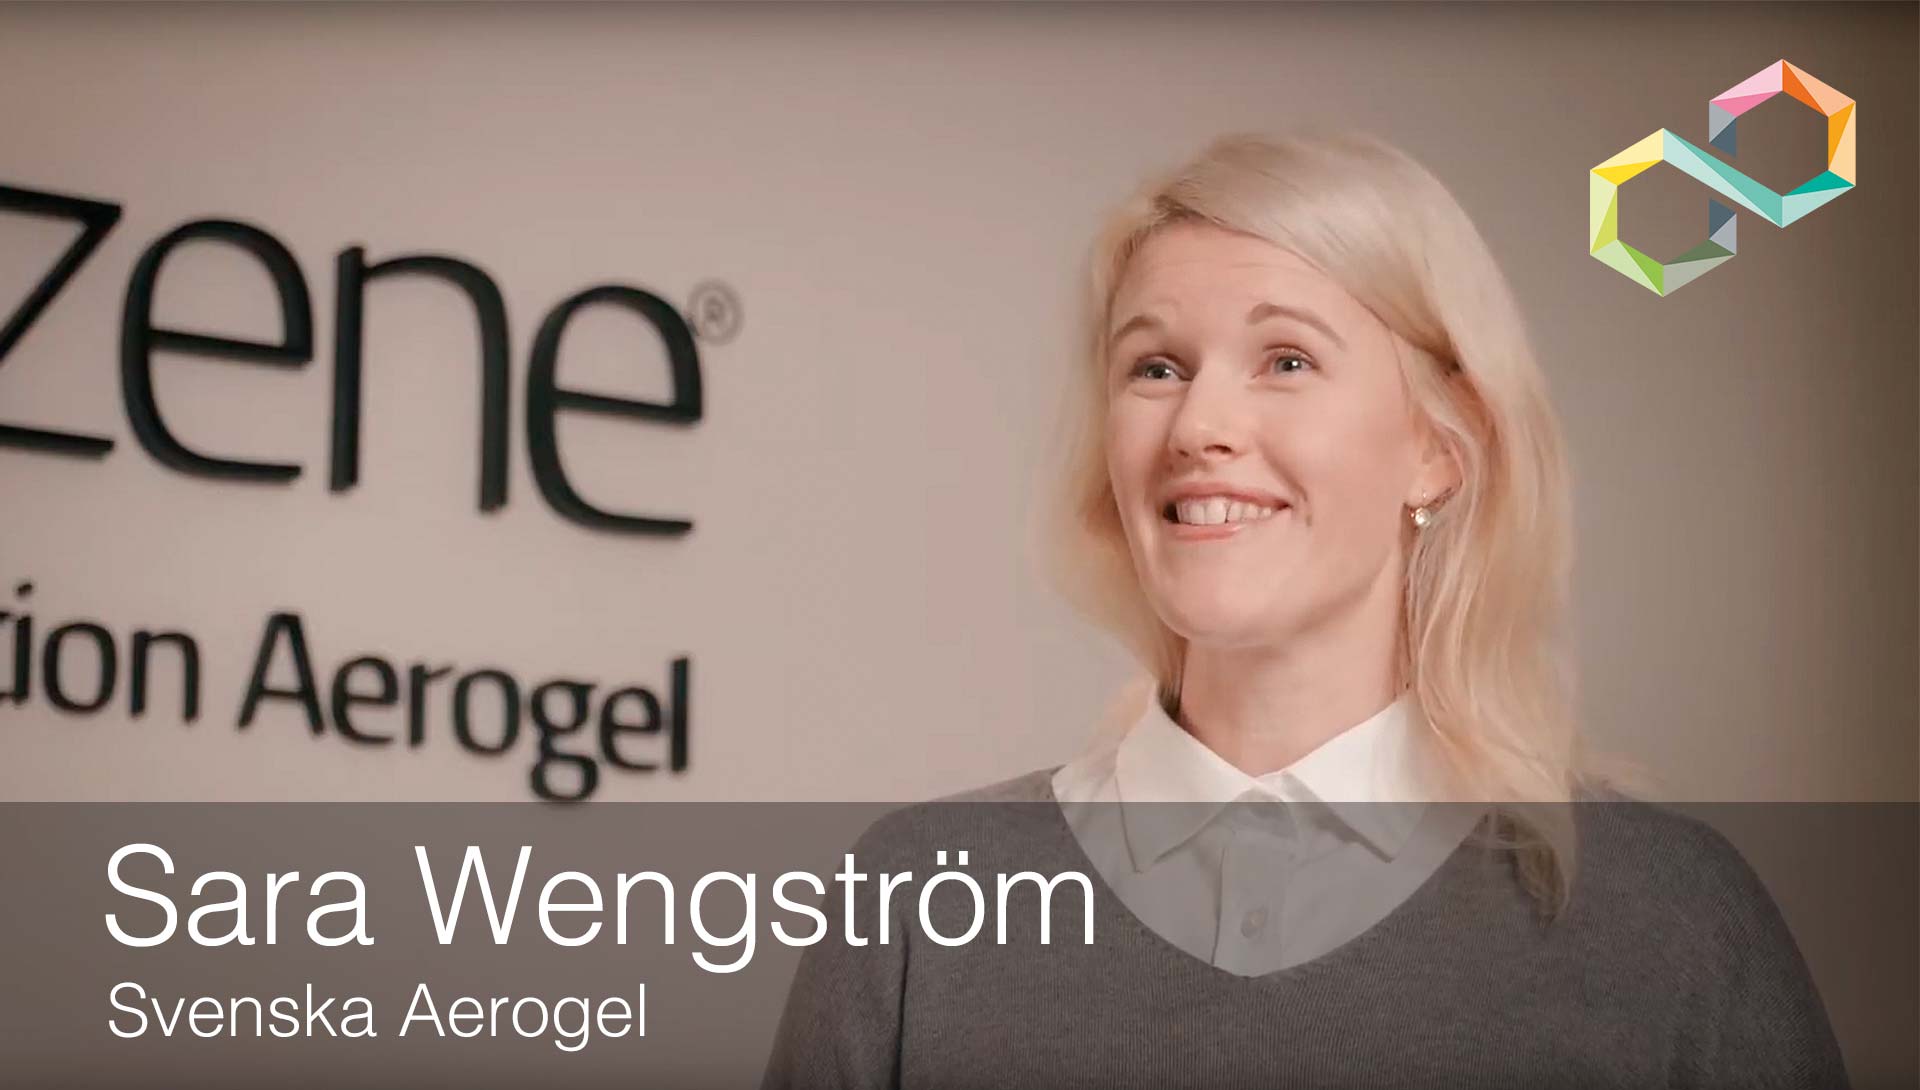 Sara Wengström, Svenska Aerogel